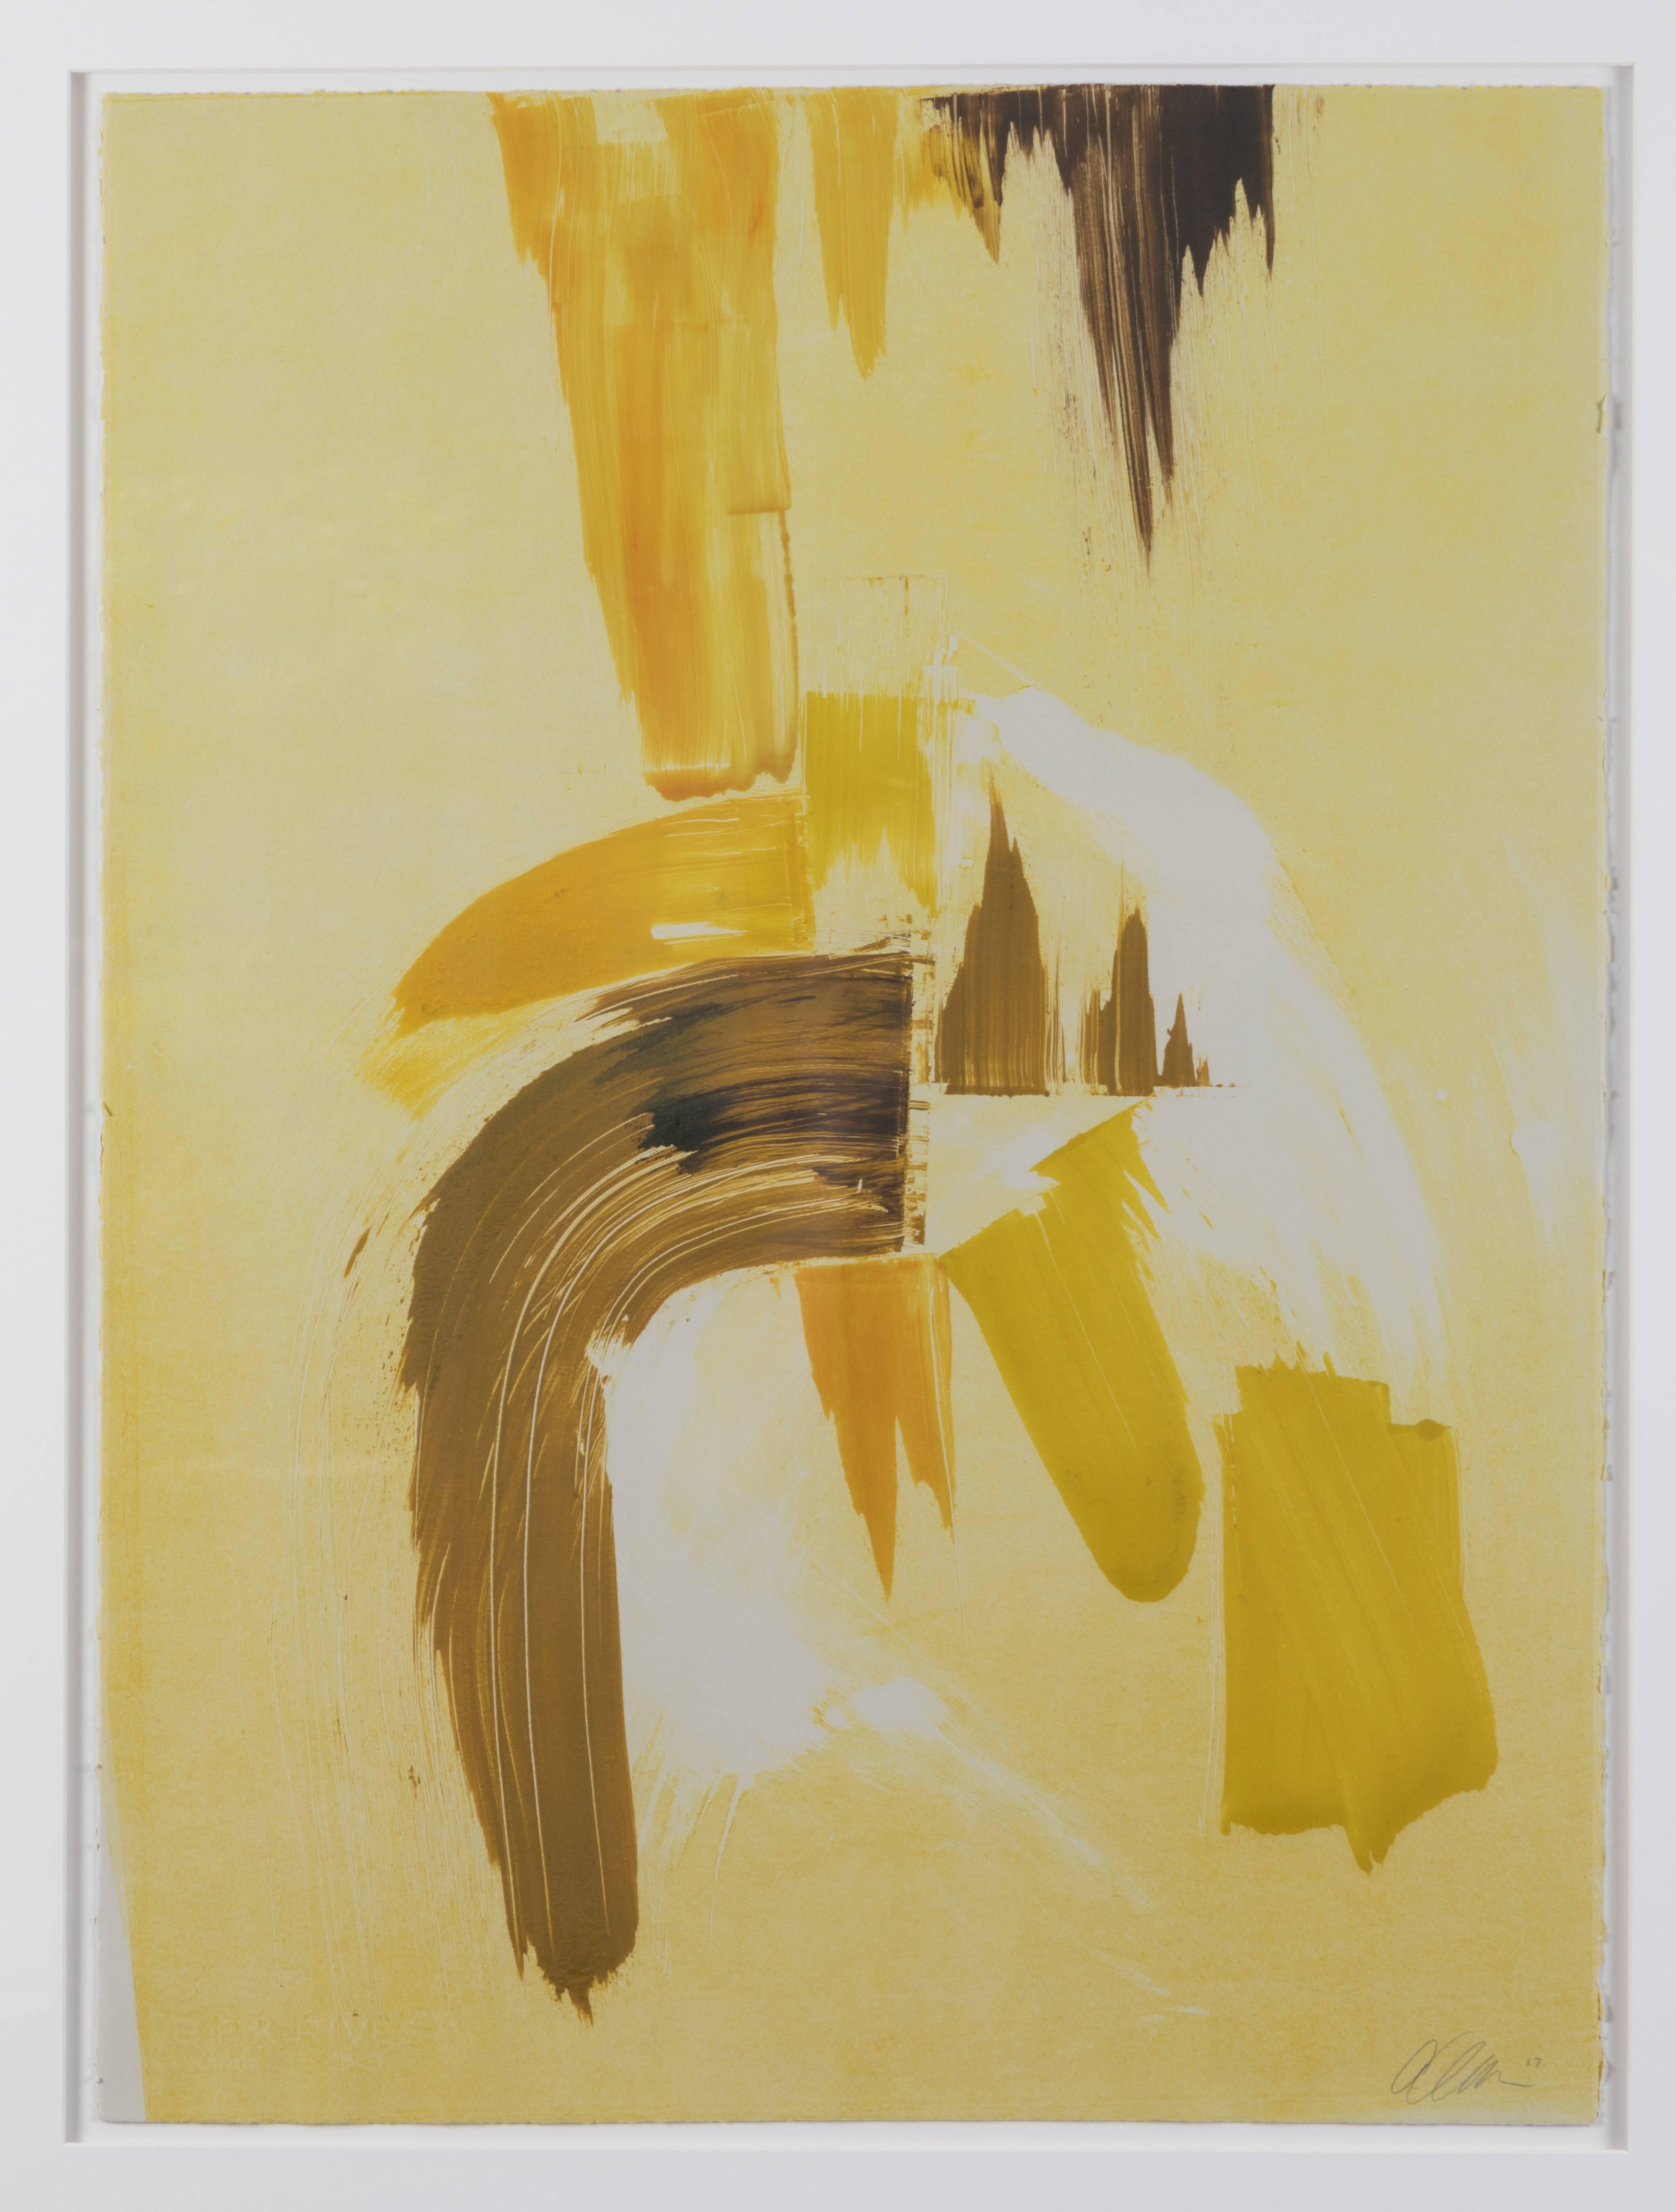 Abstract yellow monoprint #18 by Anna Ullman.